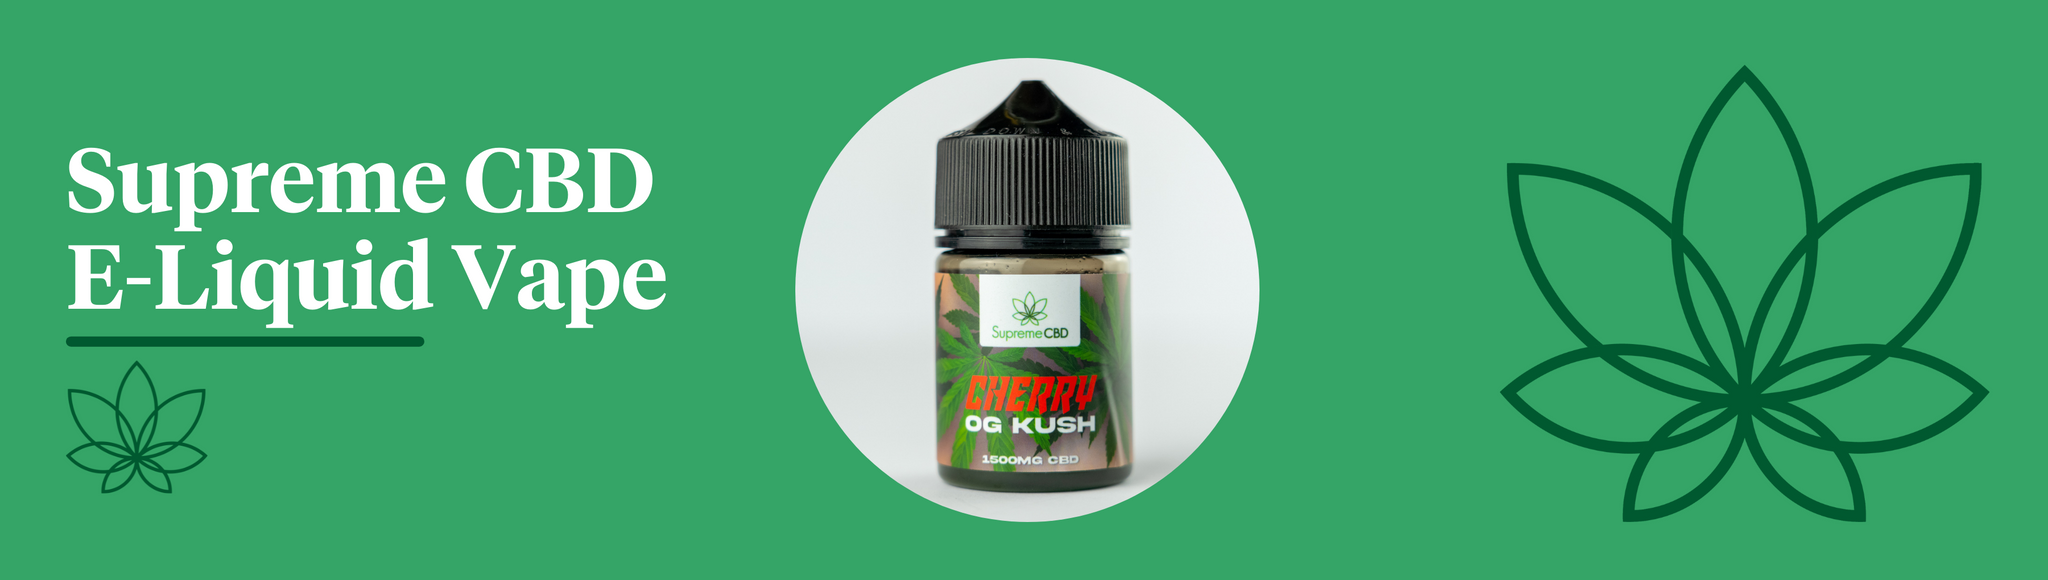 A green background with the Supreme CBD logo and an image of an E-Liquid vape liquid product, OG Kush.